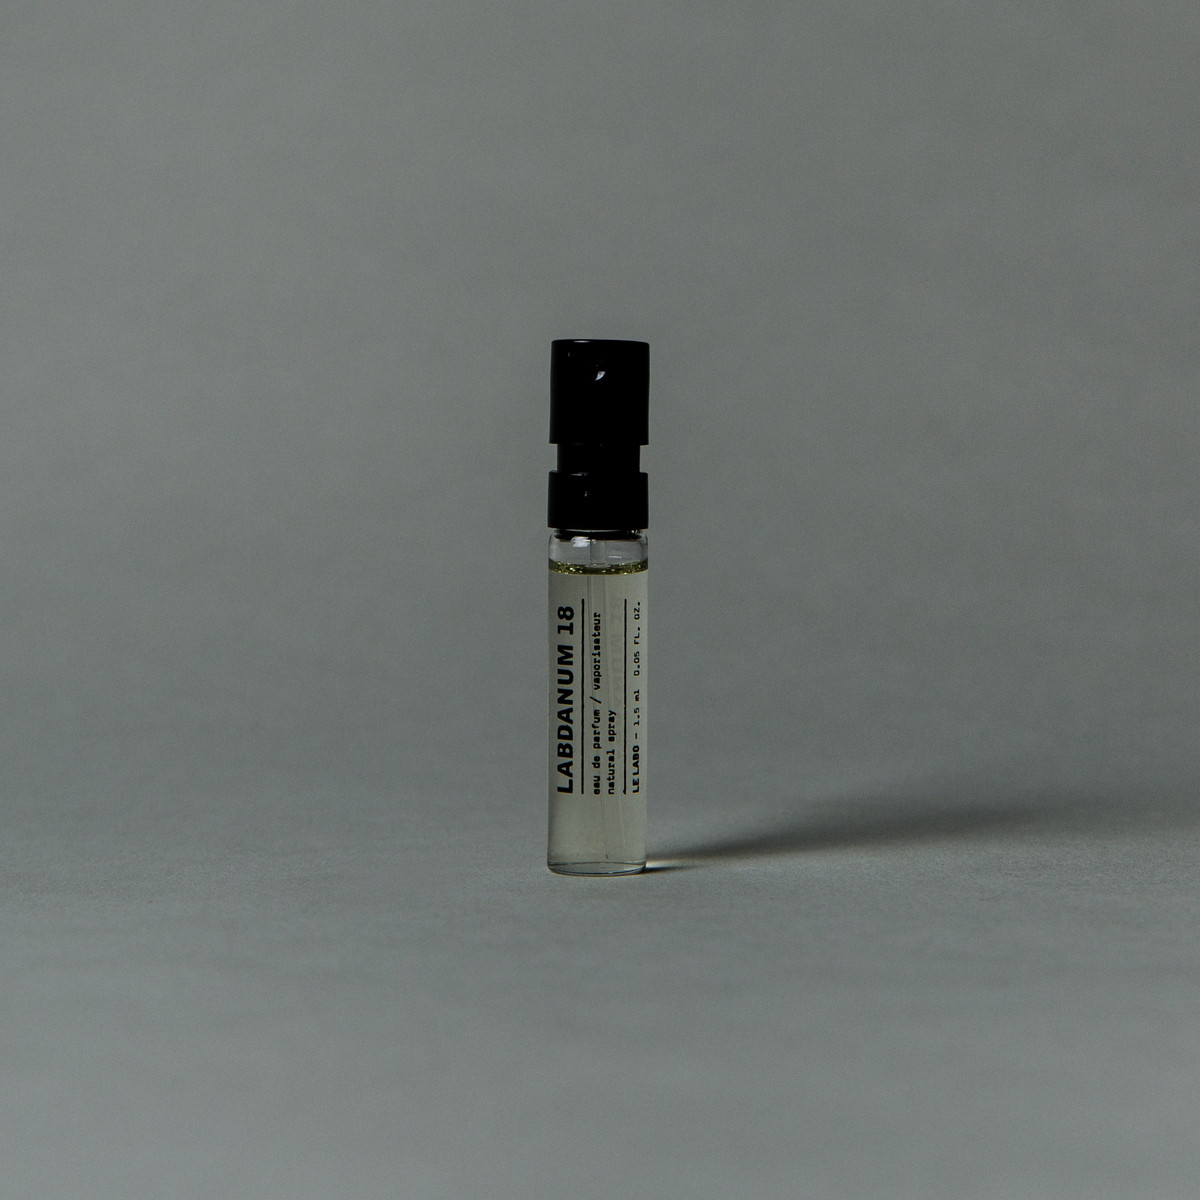 LABDANUM 18 | Sample | Le Labo Fragrances